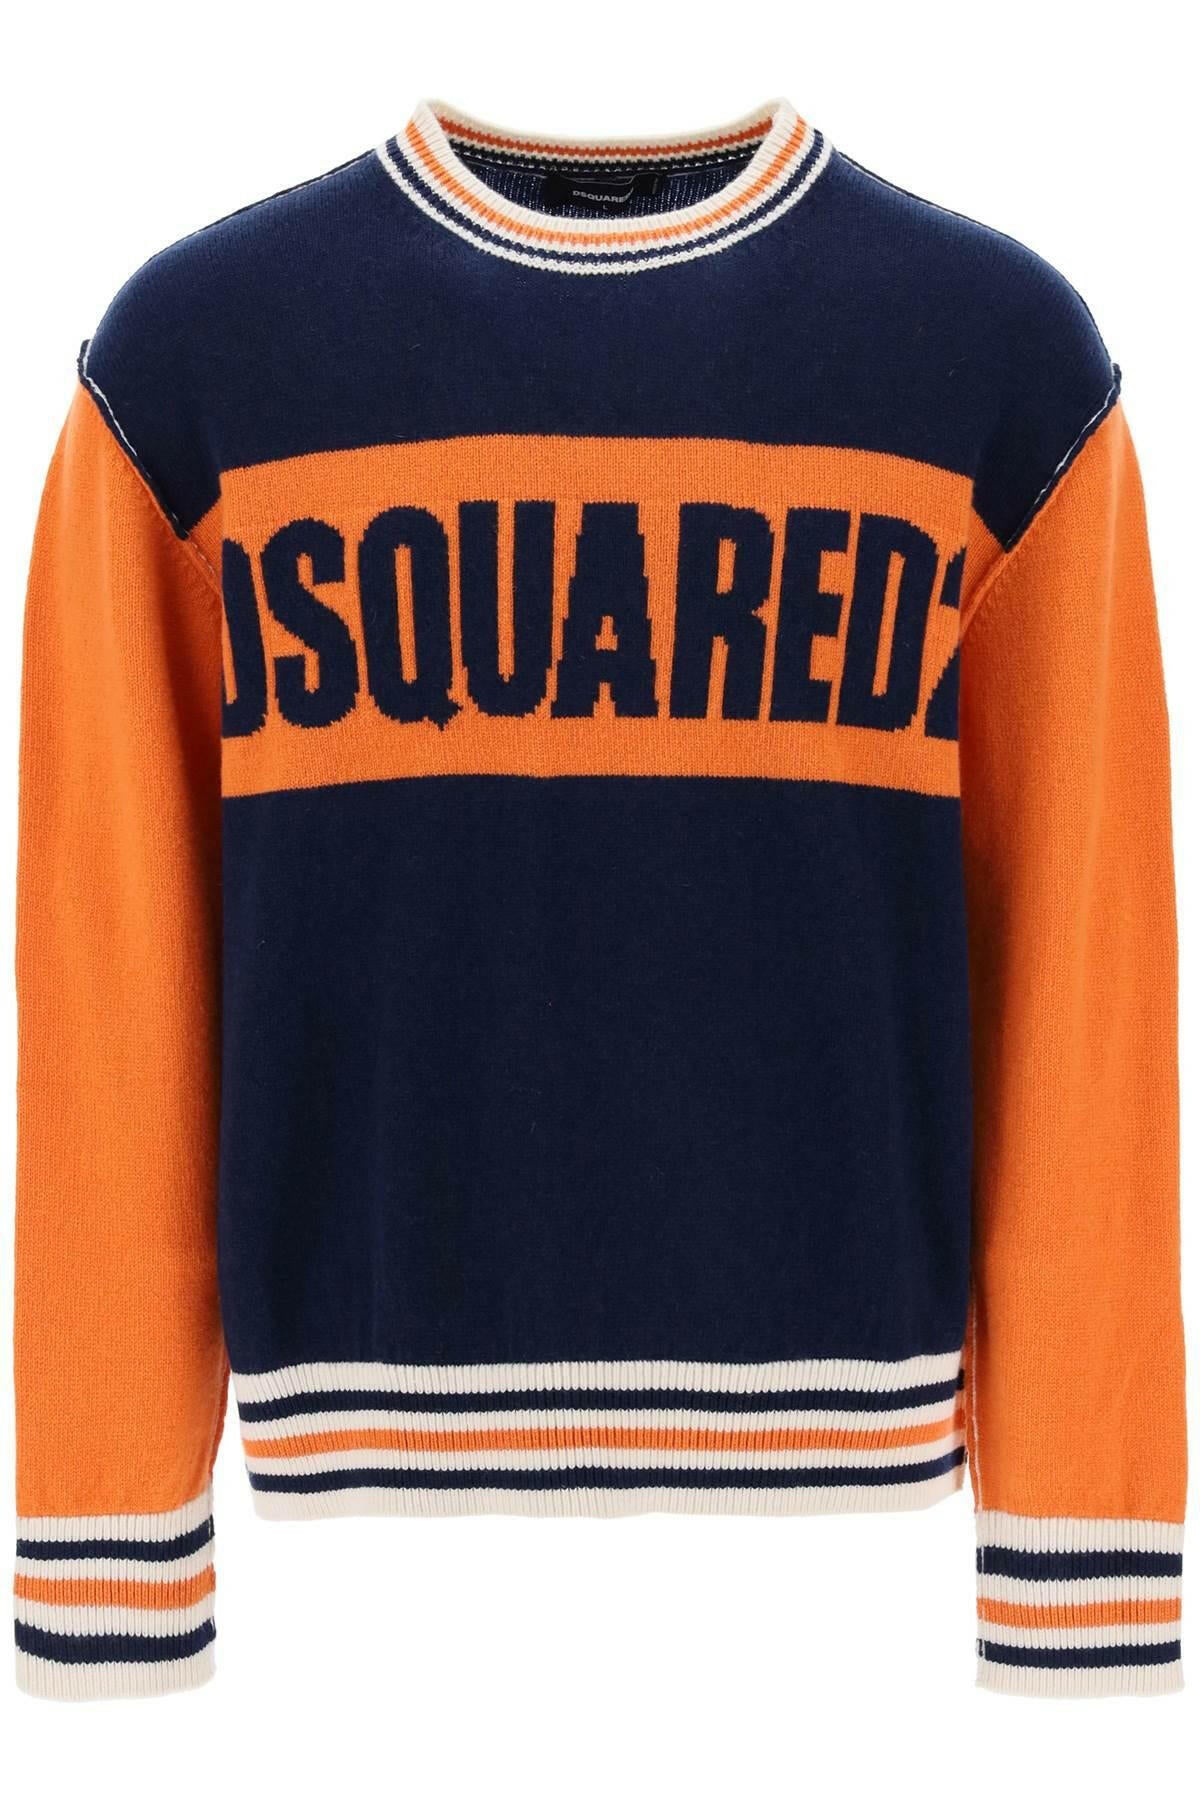 Dsquared2 College Sweater In Jacquard Wool - JOHN JULIA